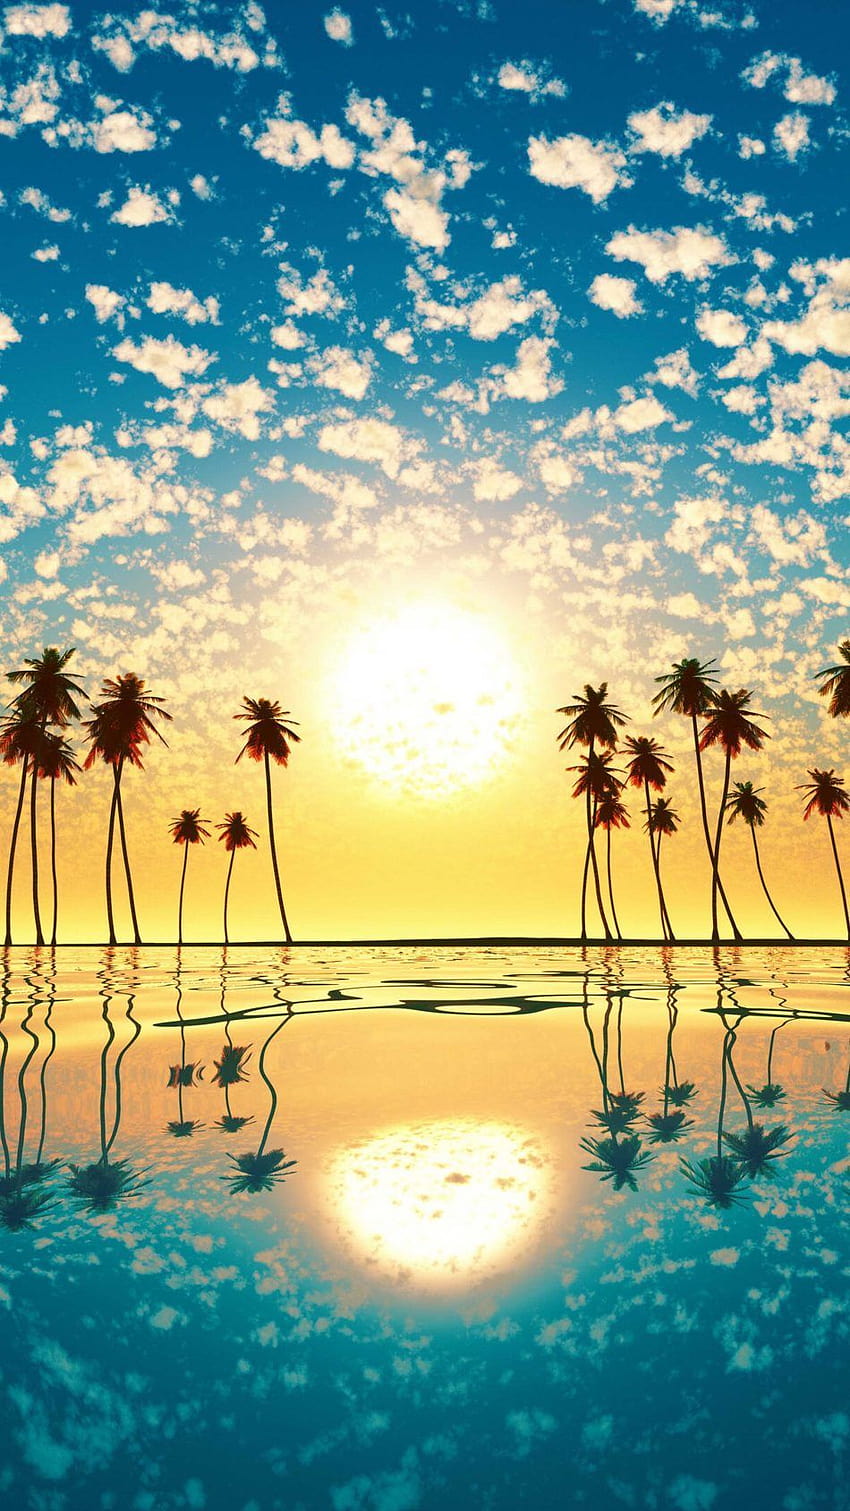 Sunset Palm Tree Cloud Sky Reflection Ultra Mobile pada tahun 2020, langit refleksi pohon palem wallpaper ponsel HD